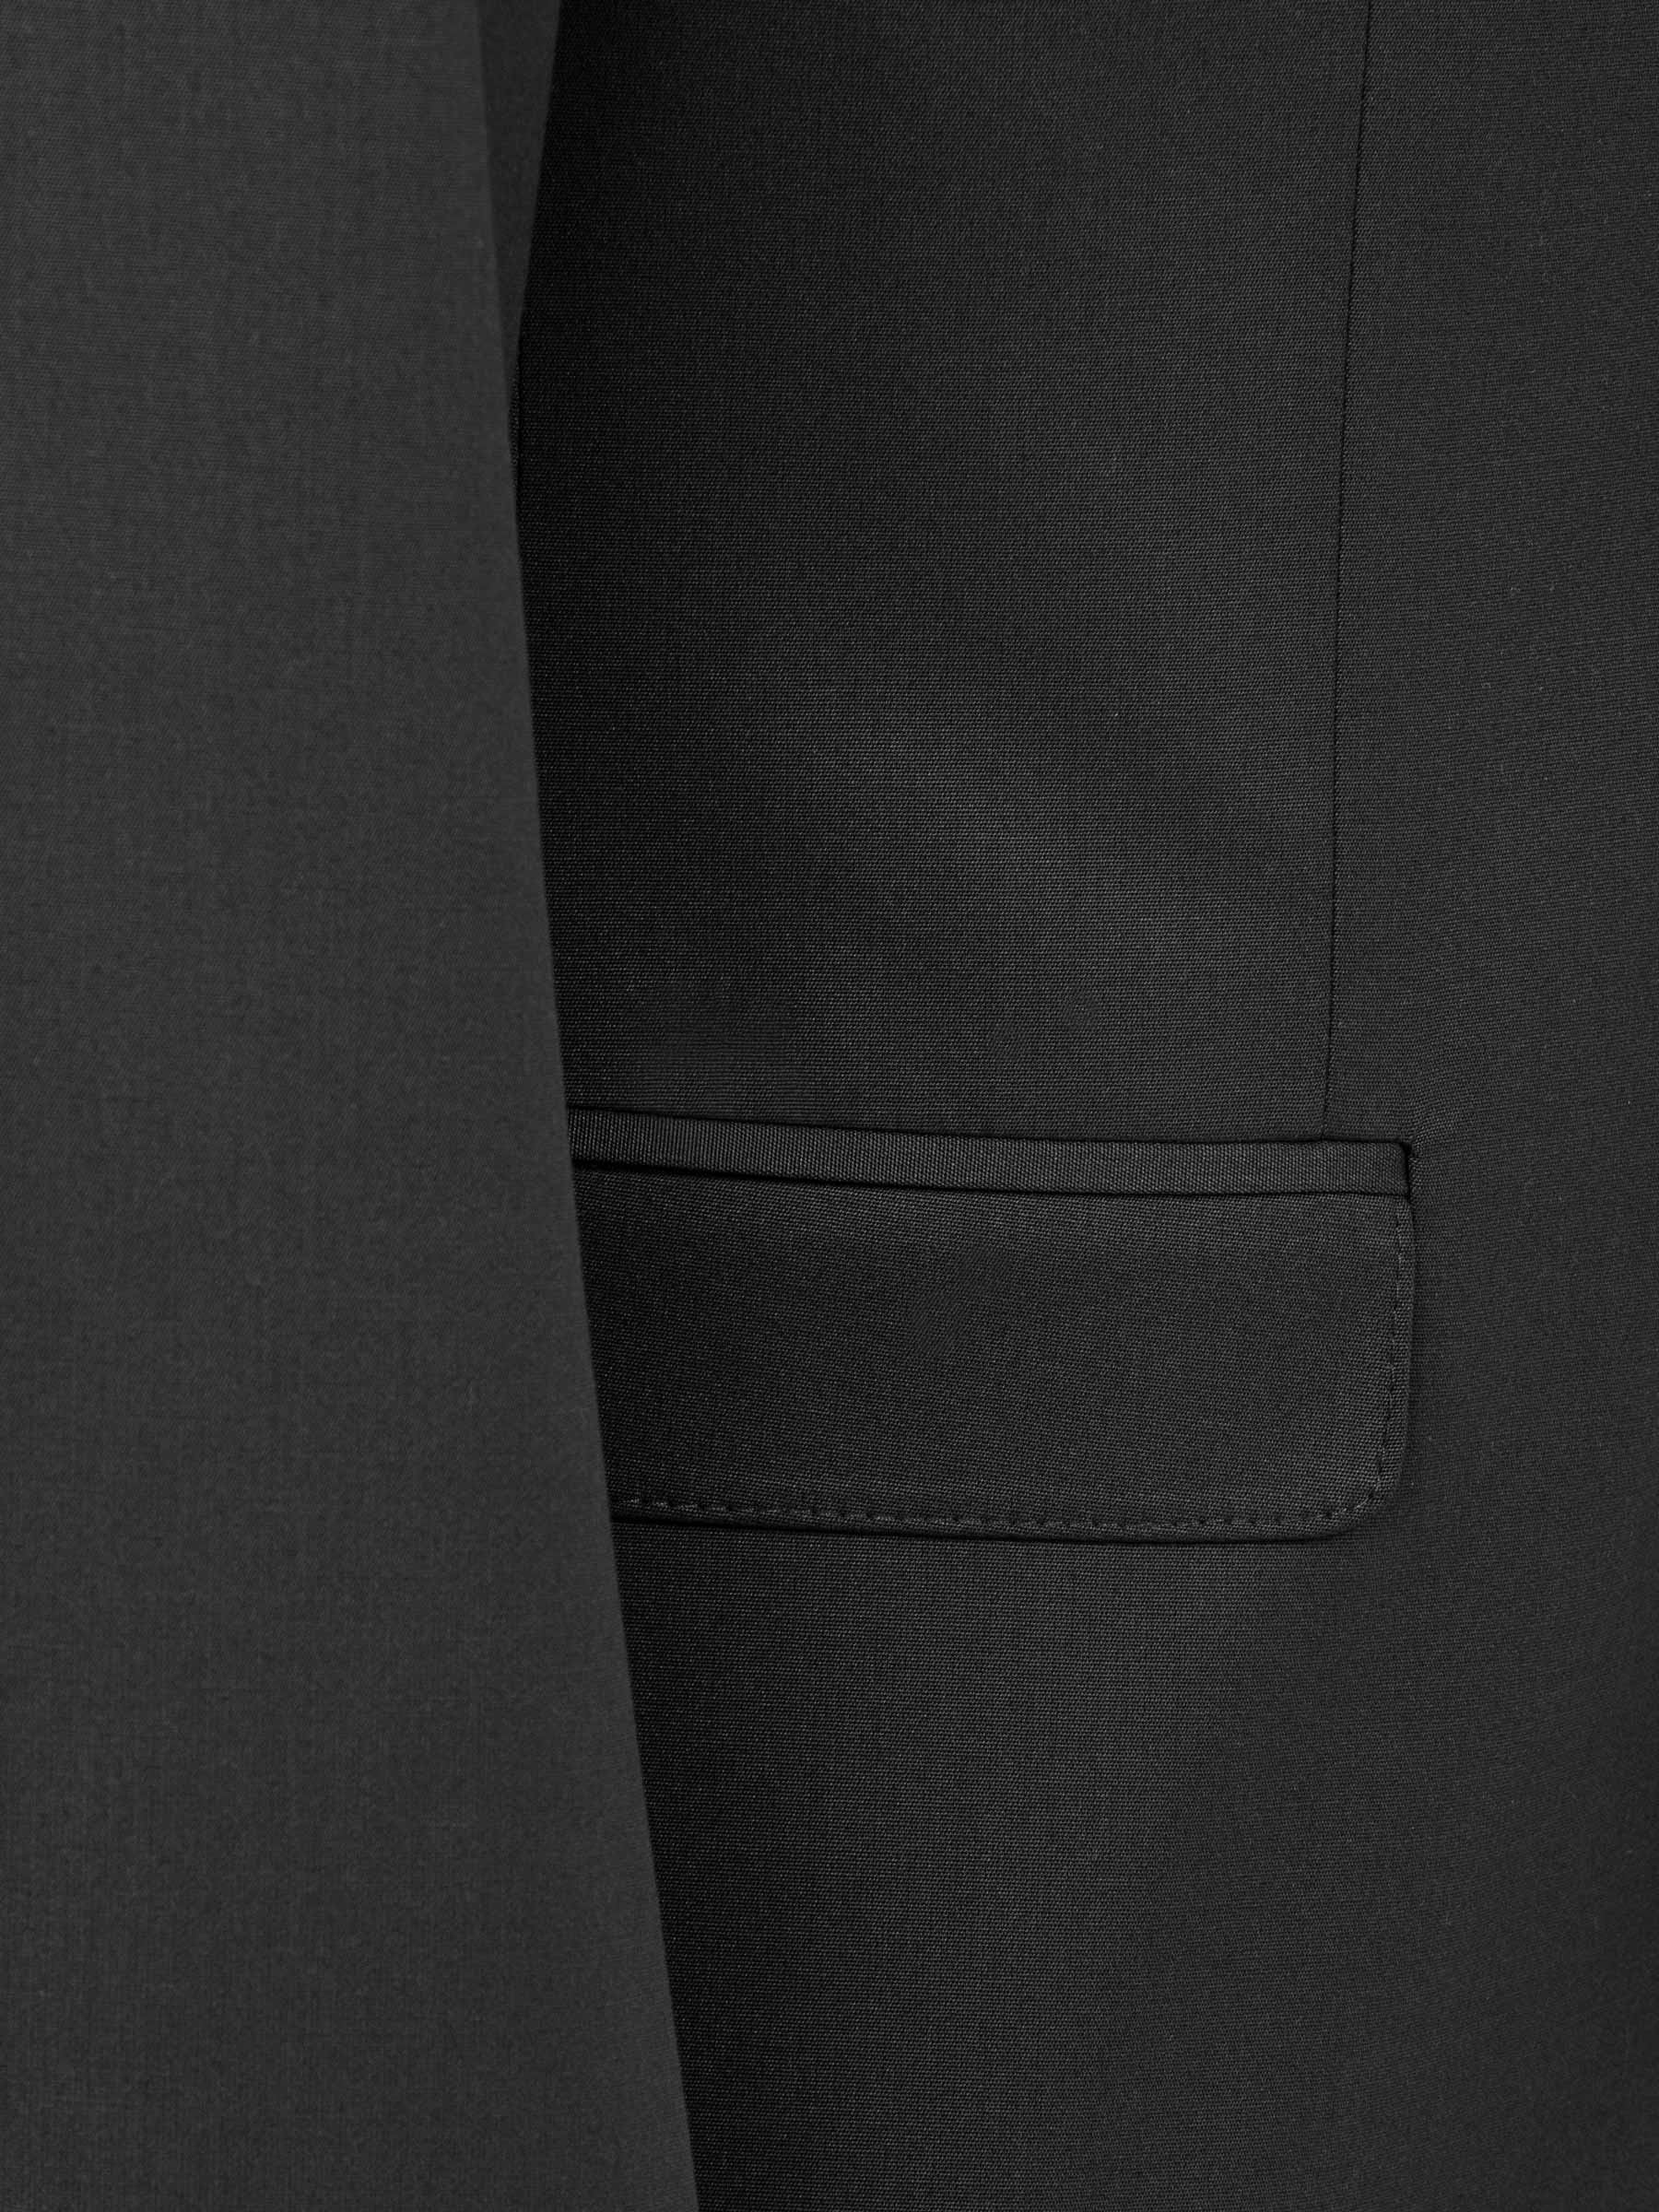 Scottsville Notch Lapel Black Suit Colbert 